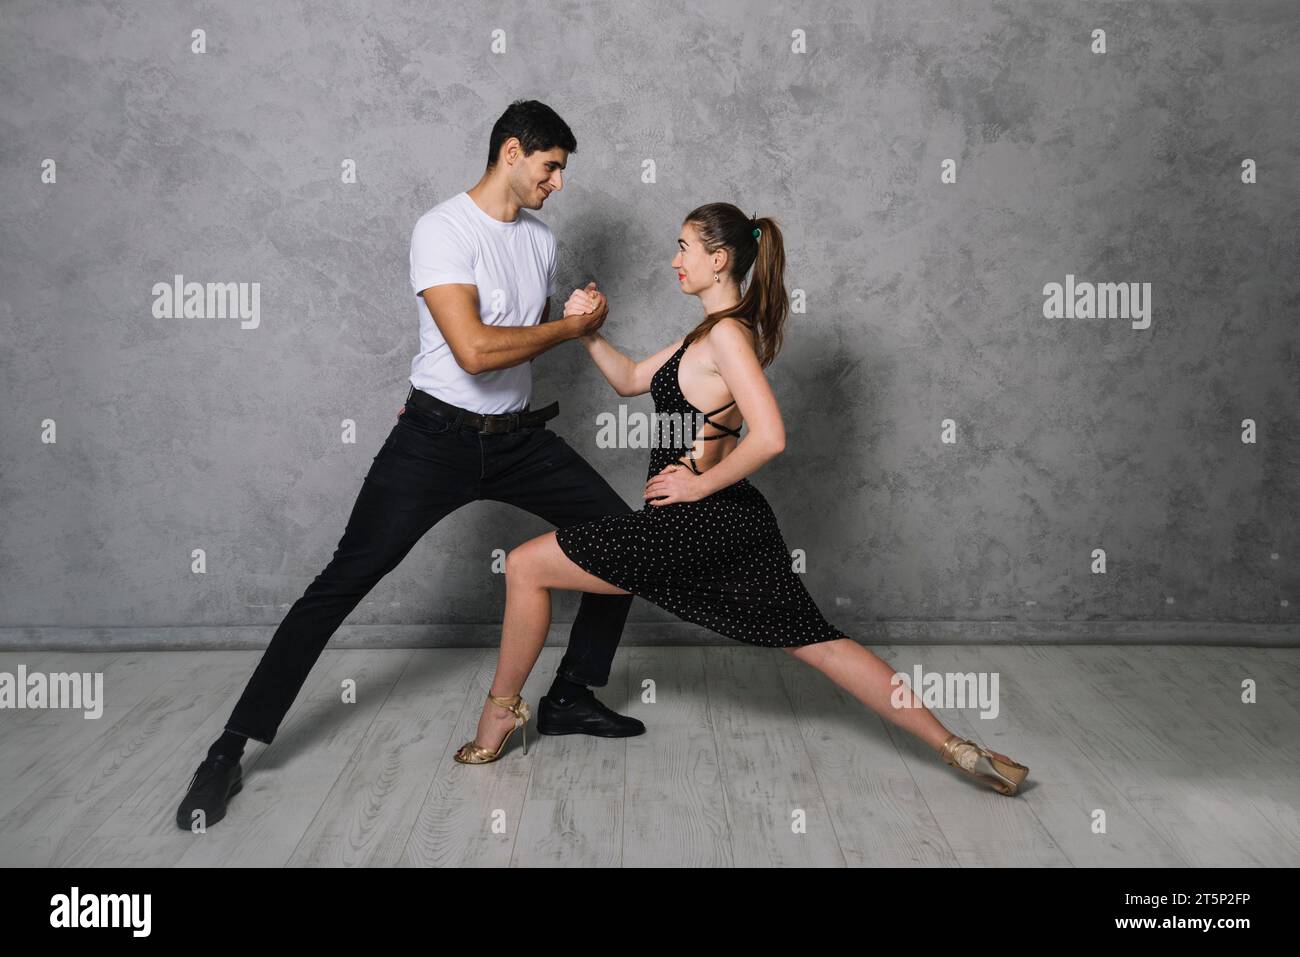 Young dance partners dancing tango Stock Photo